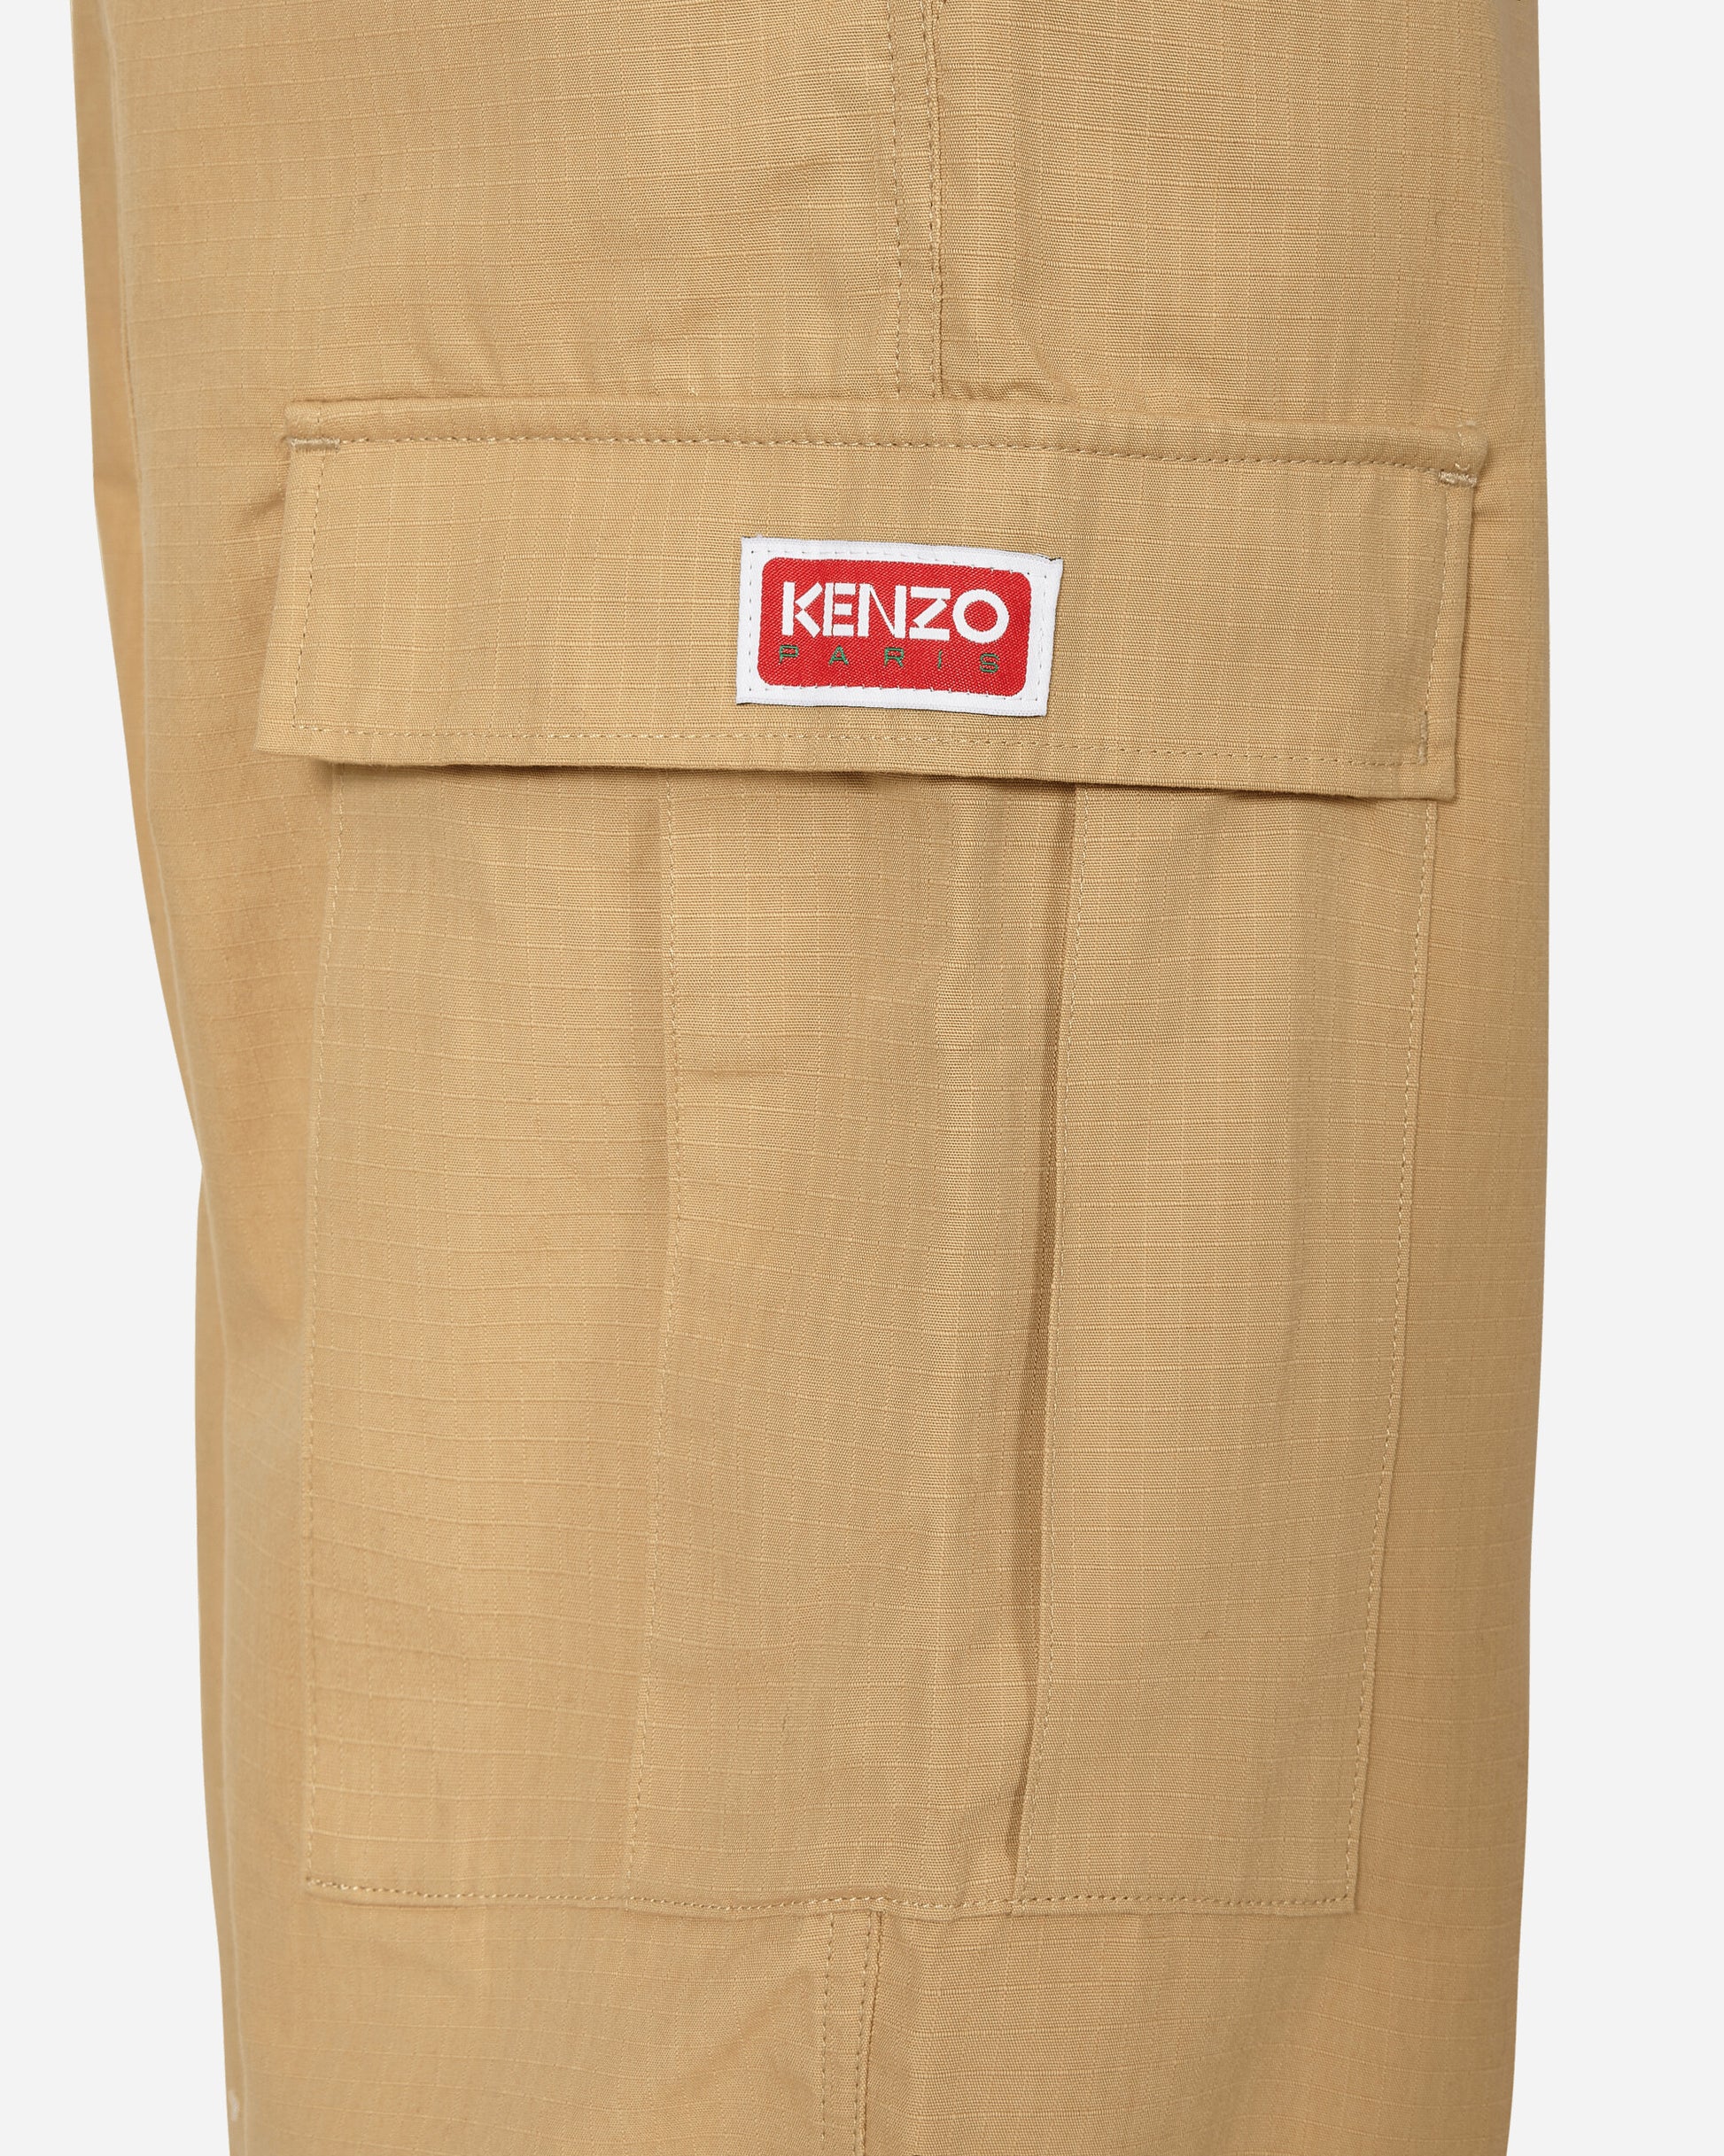 KENZO Paris Cargo Workwear Pant Camel Pants Trousers FD65PA2429DL 12